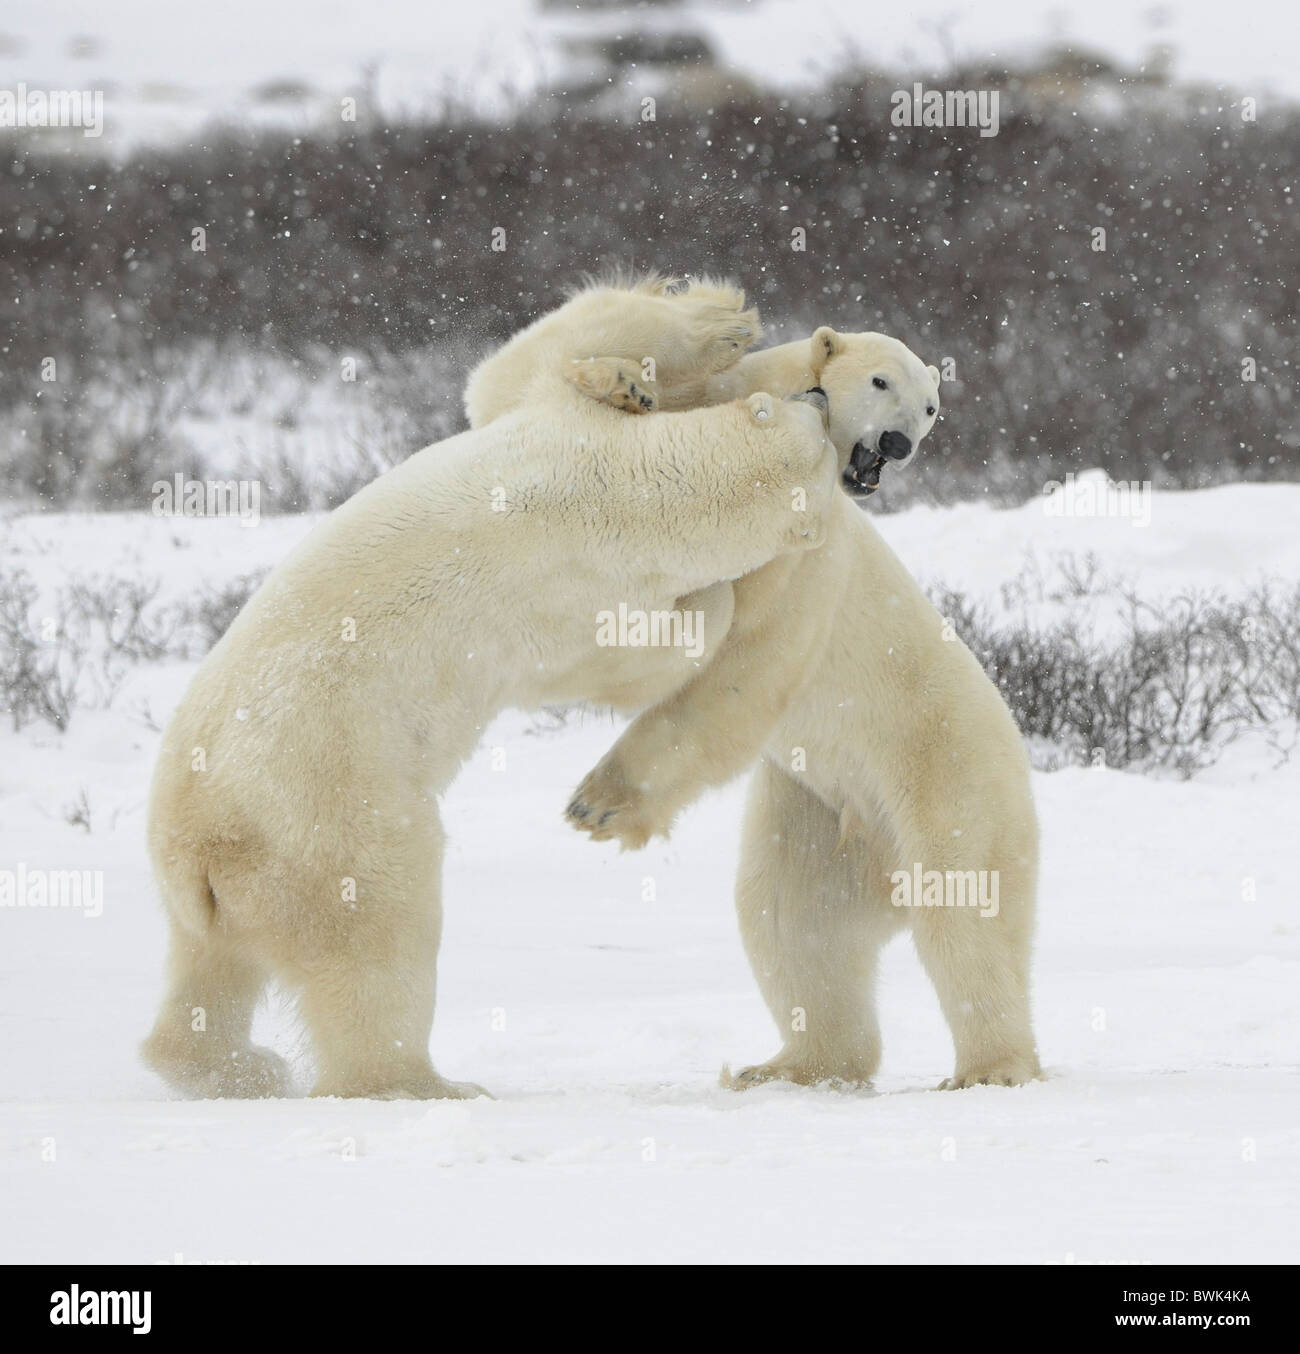 Fight of polar bears. Two polar bears fight. Tundra with undersized vegetation. Snow. Stock Photo